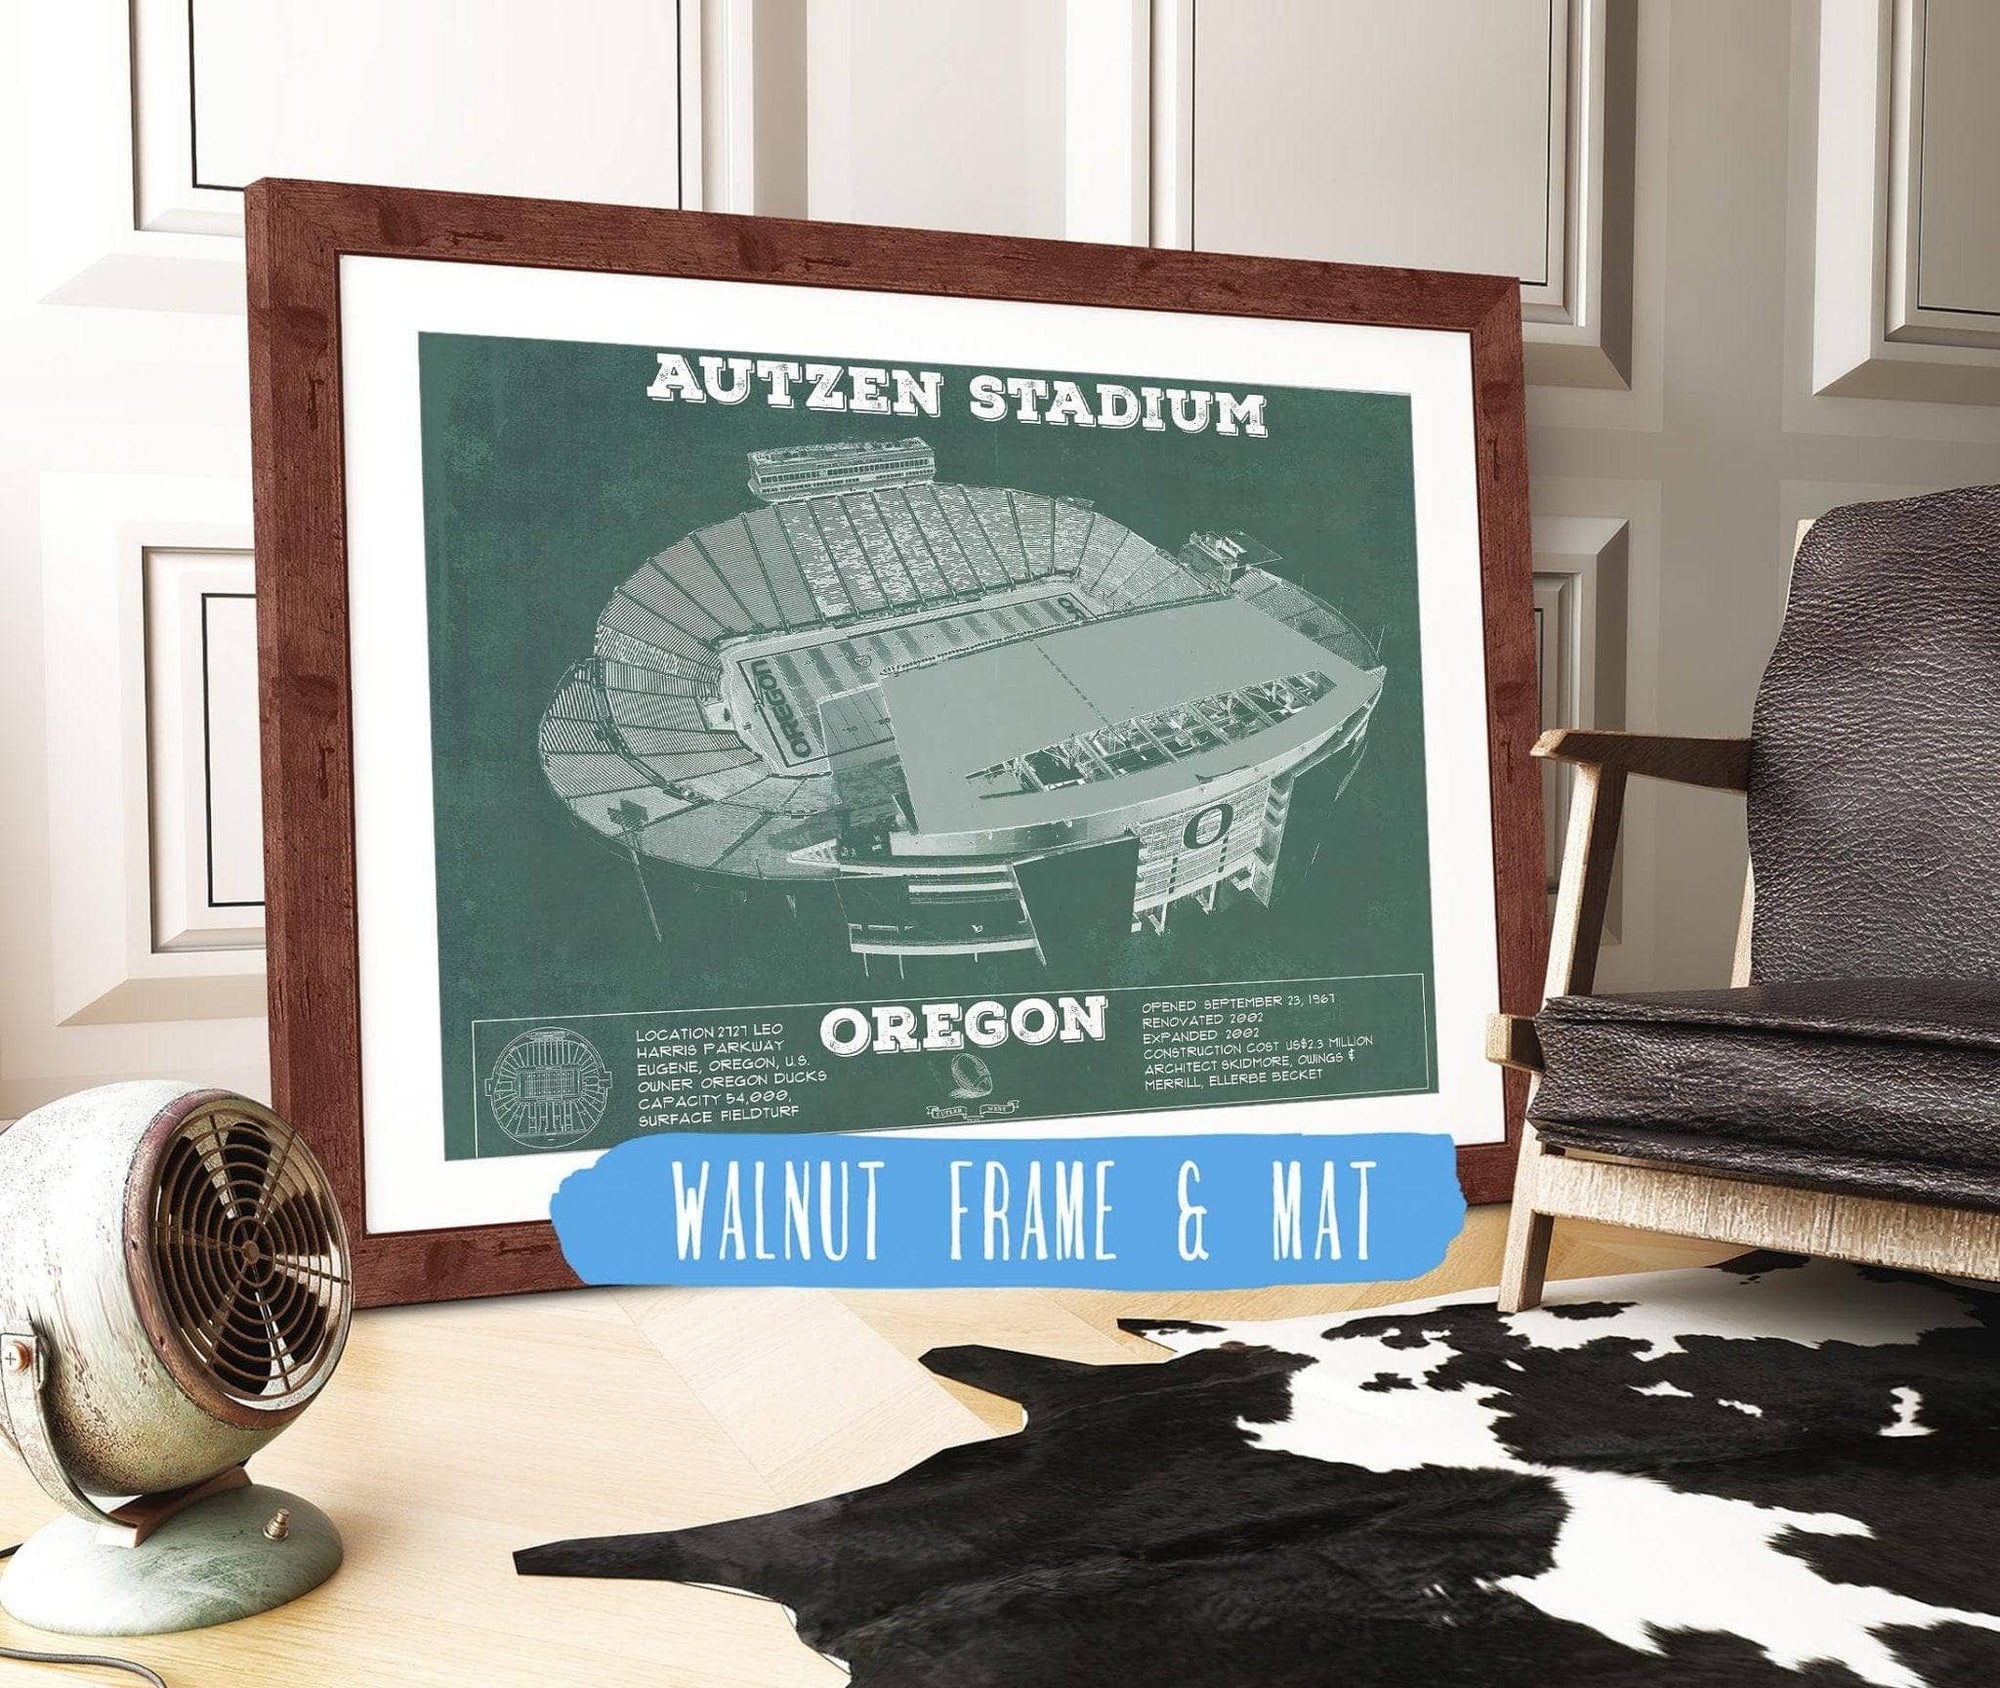 Cutler West College Football Collection 14" x 11" / Walnut Frame & Mat Vintage Autzen Stadium - Oregon Ducks Football Print 718616953-14"-x-11"35739